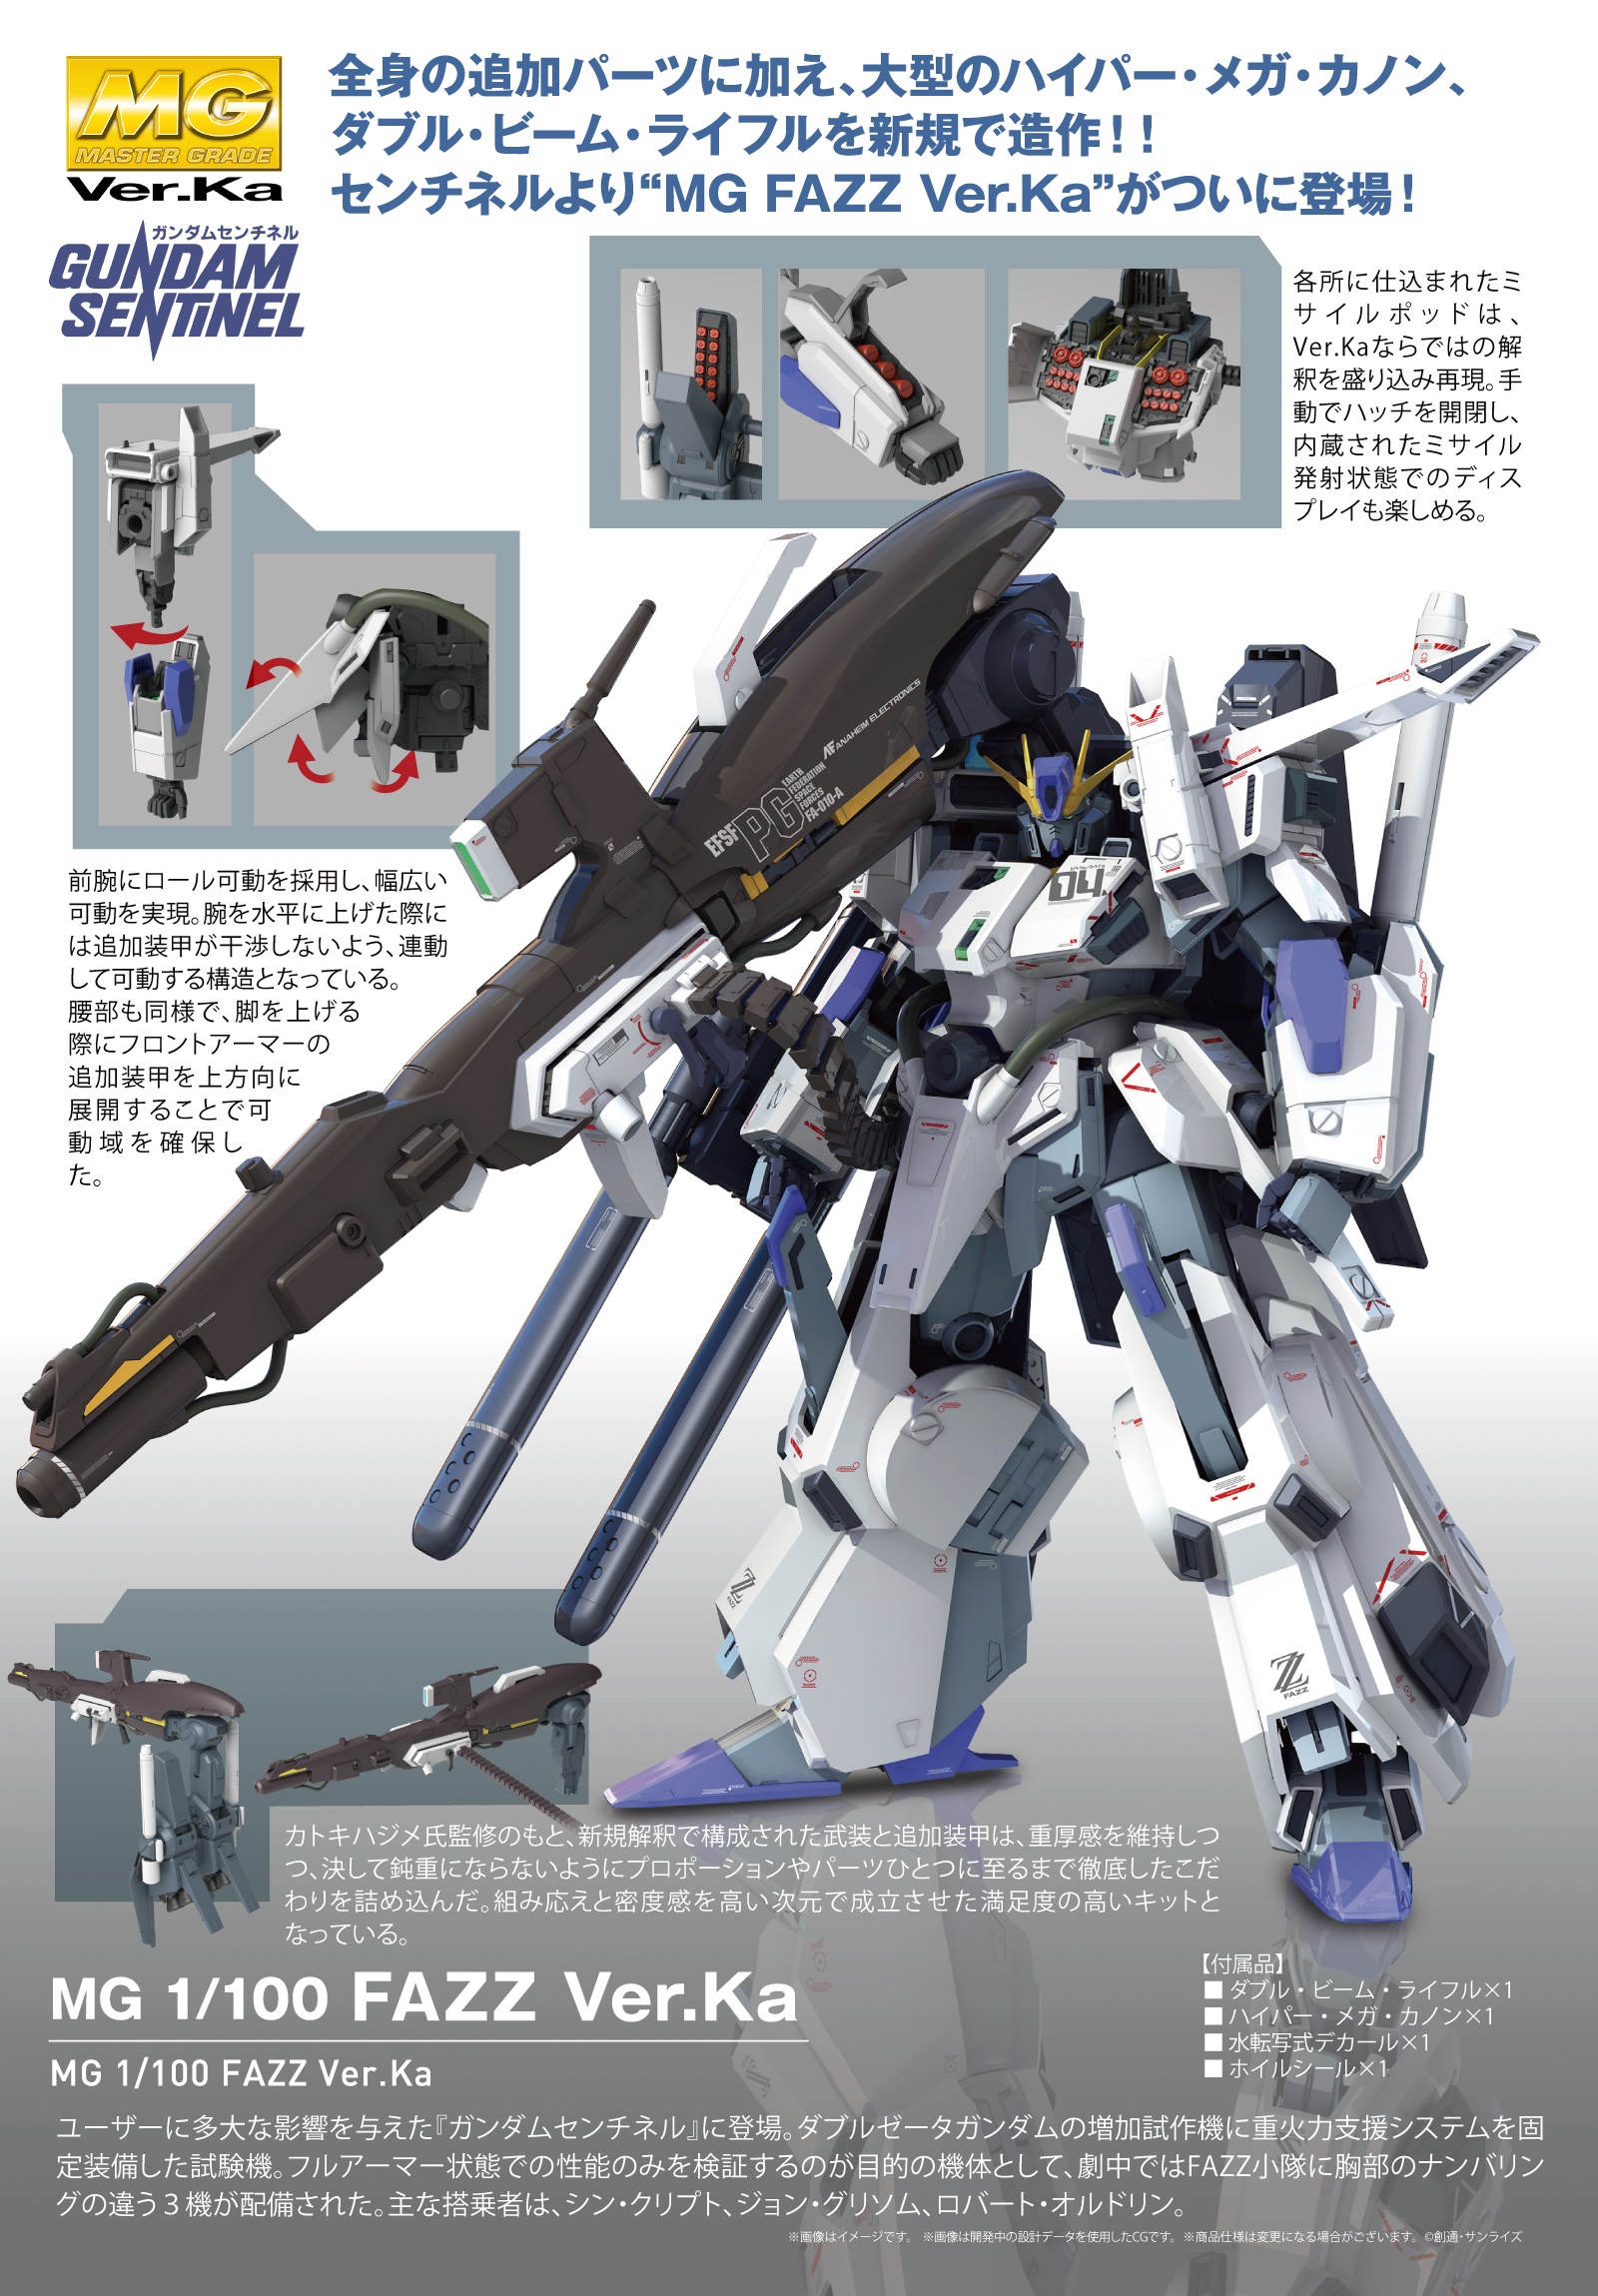 Gundam MG 1/100 FAZZ VER.KA Anaheim Electronics F.A Test Ms Bandai Model Kit 